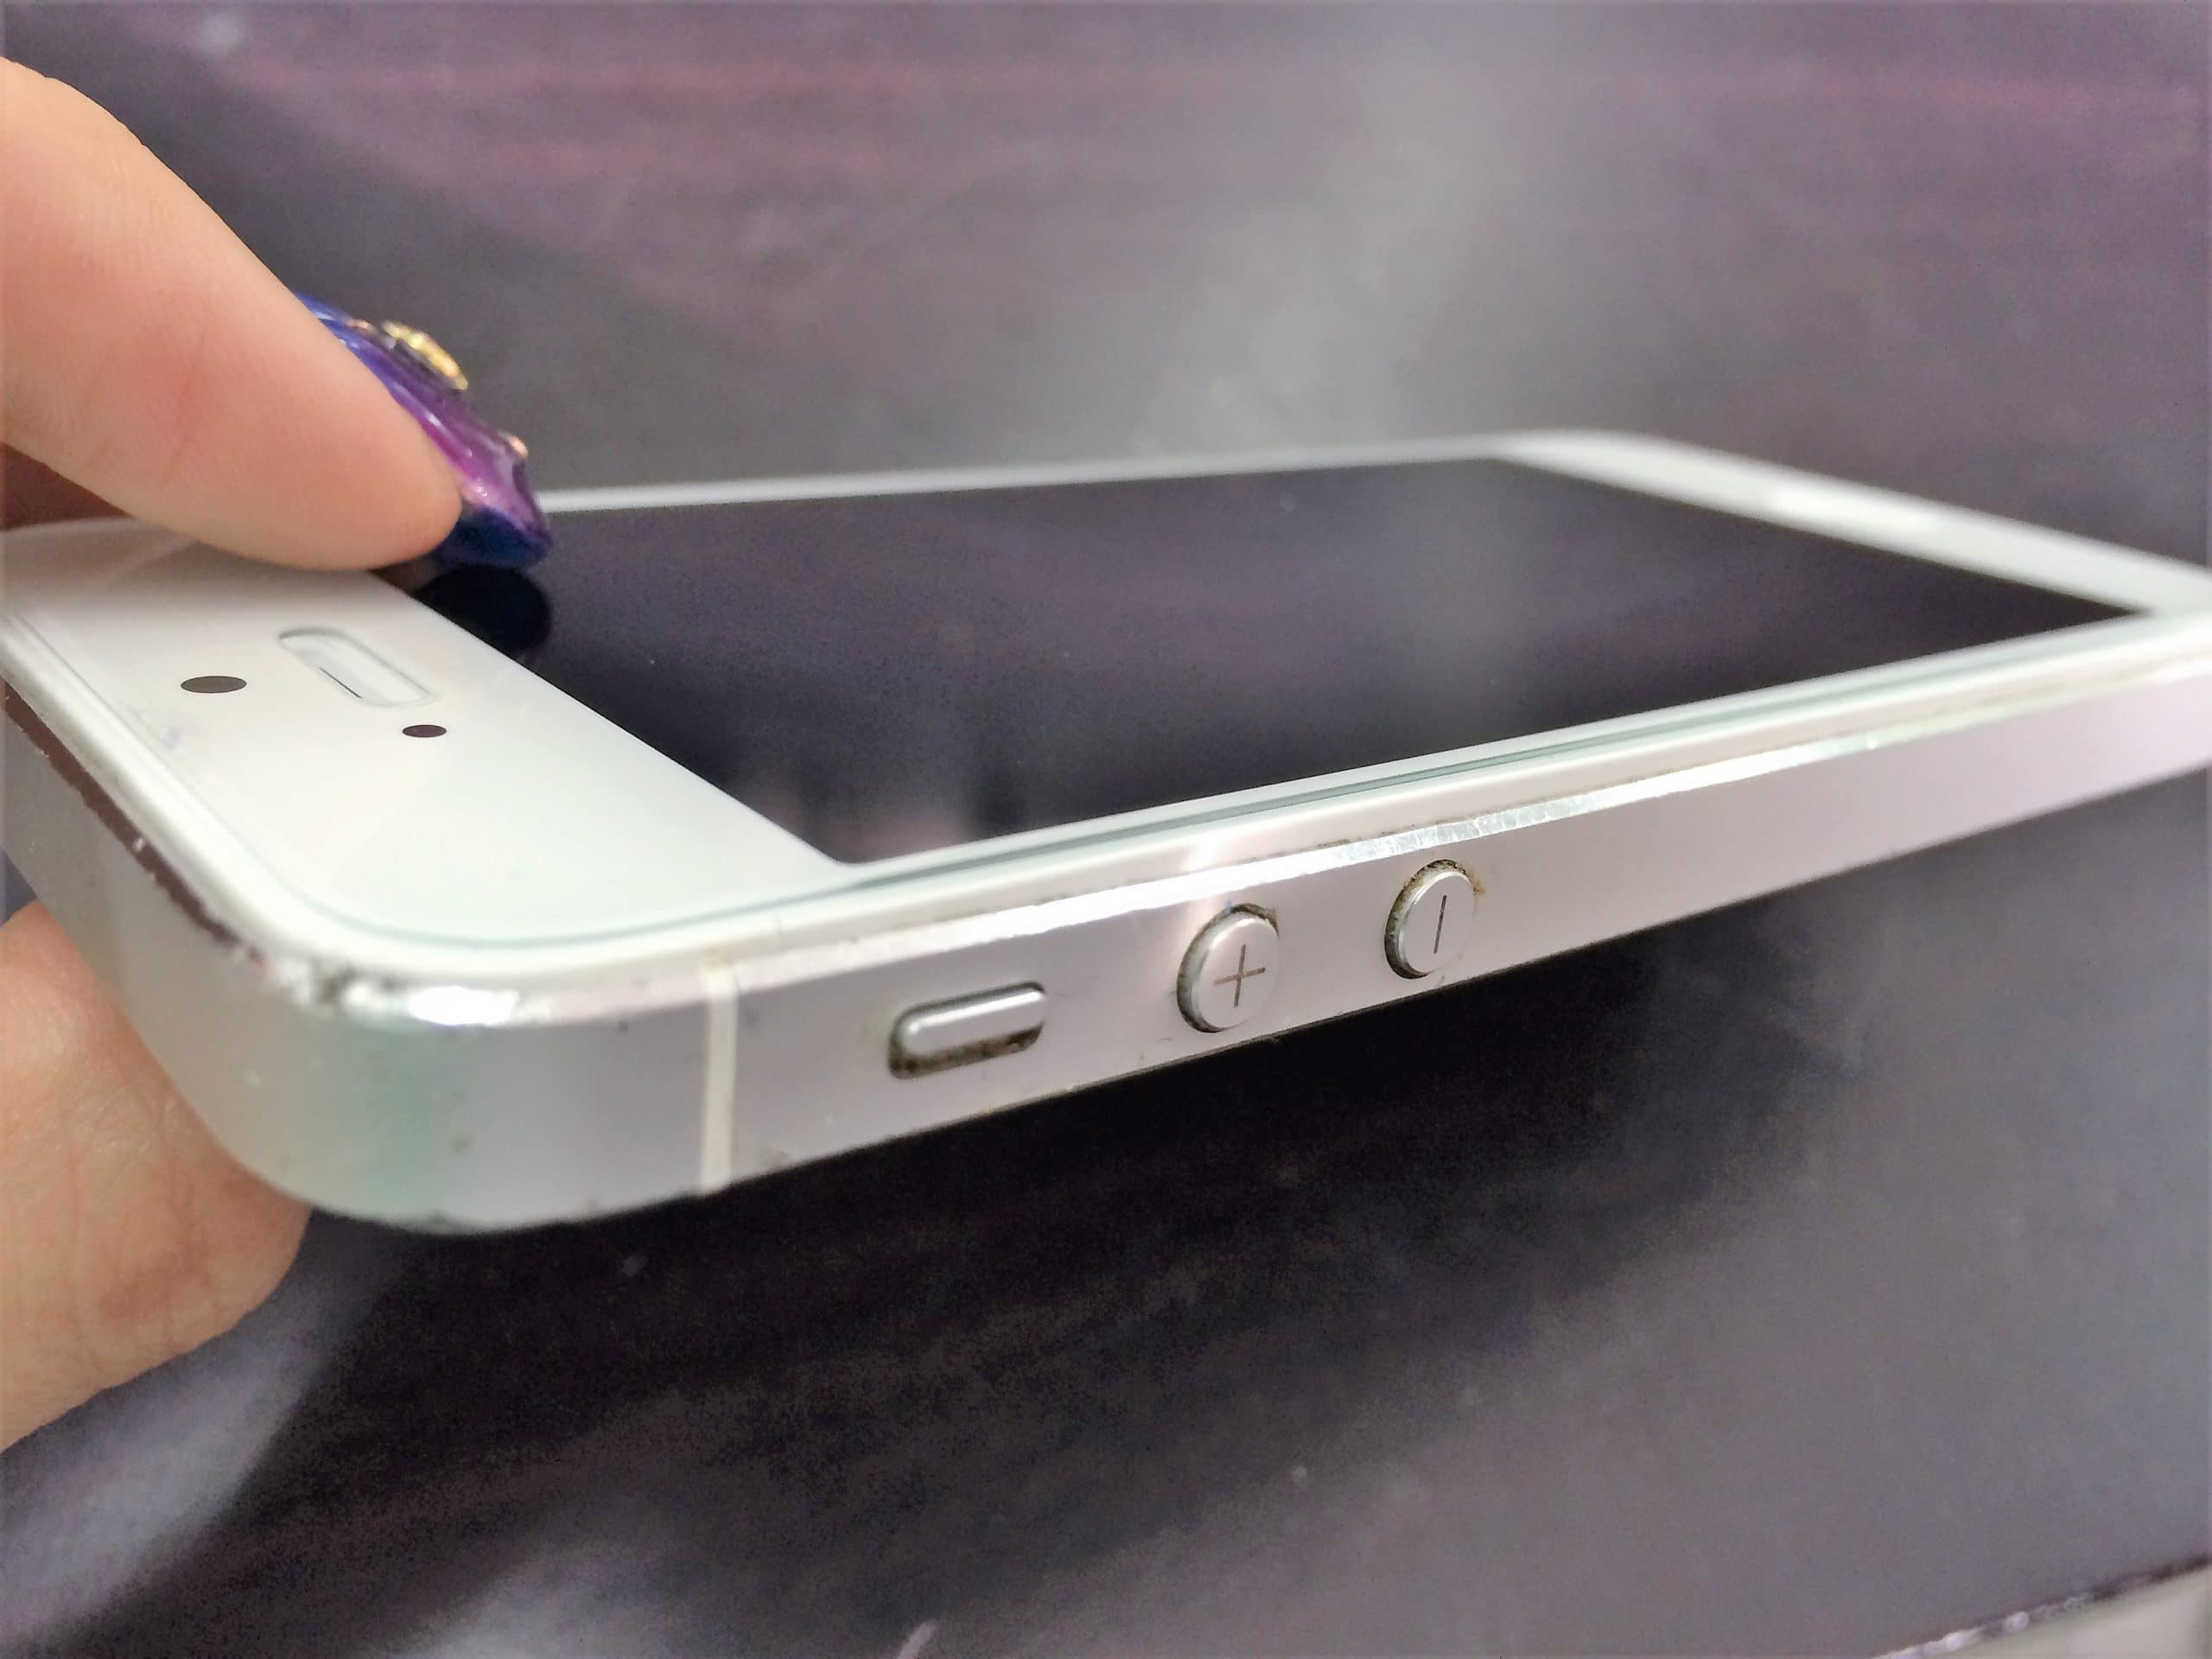 iPhoneに使われているリチウムイオン電池は特性上、劣化で膨張してしまう可能性があります。